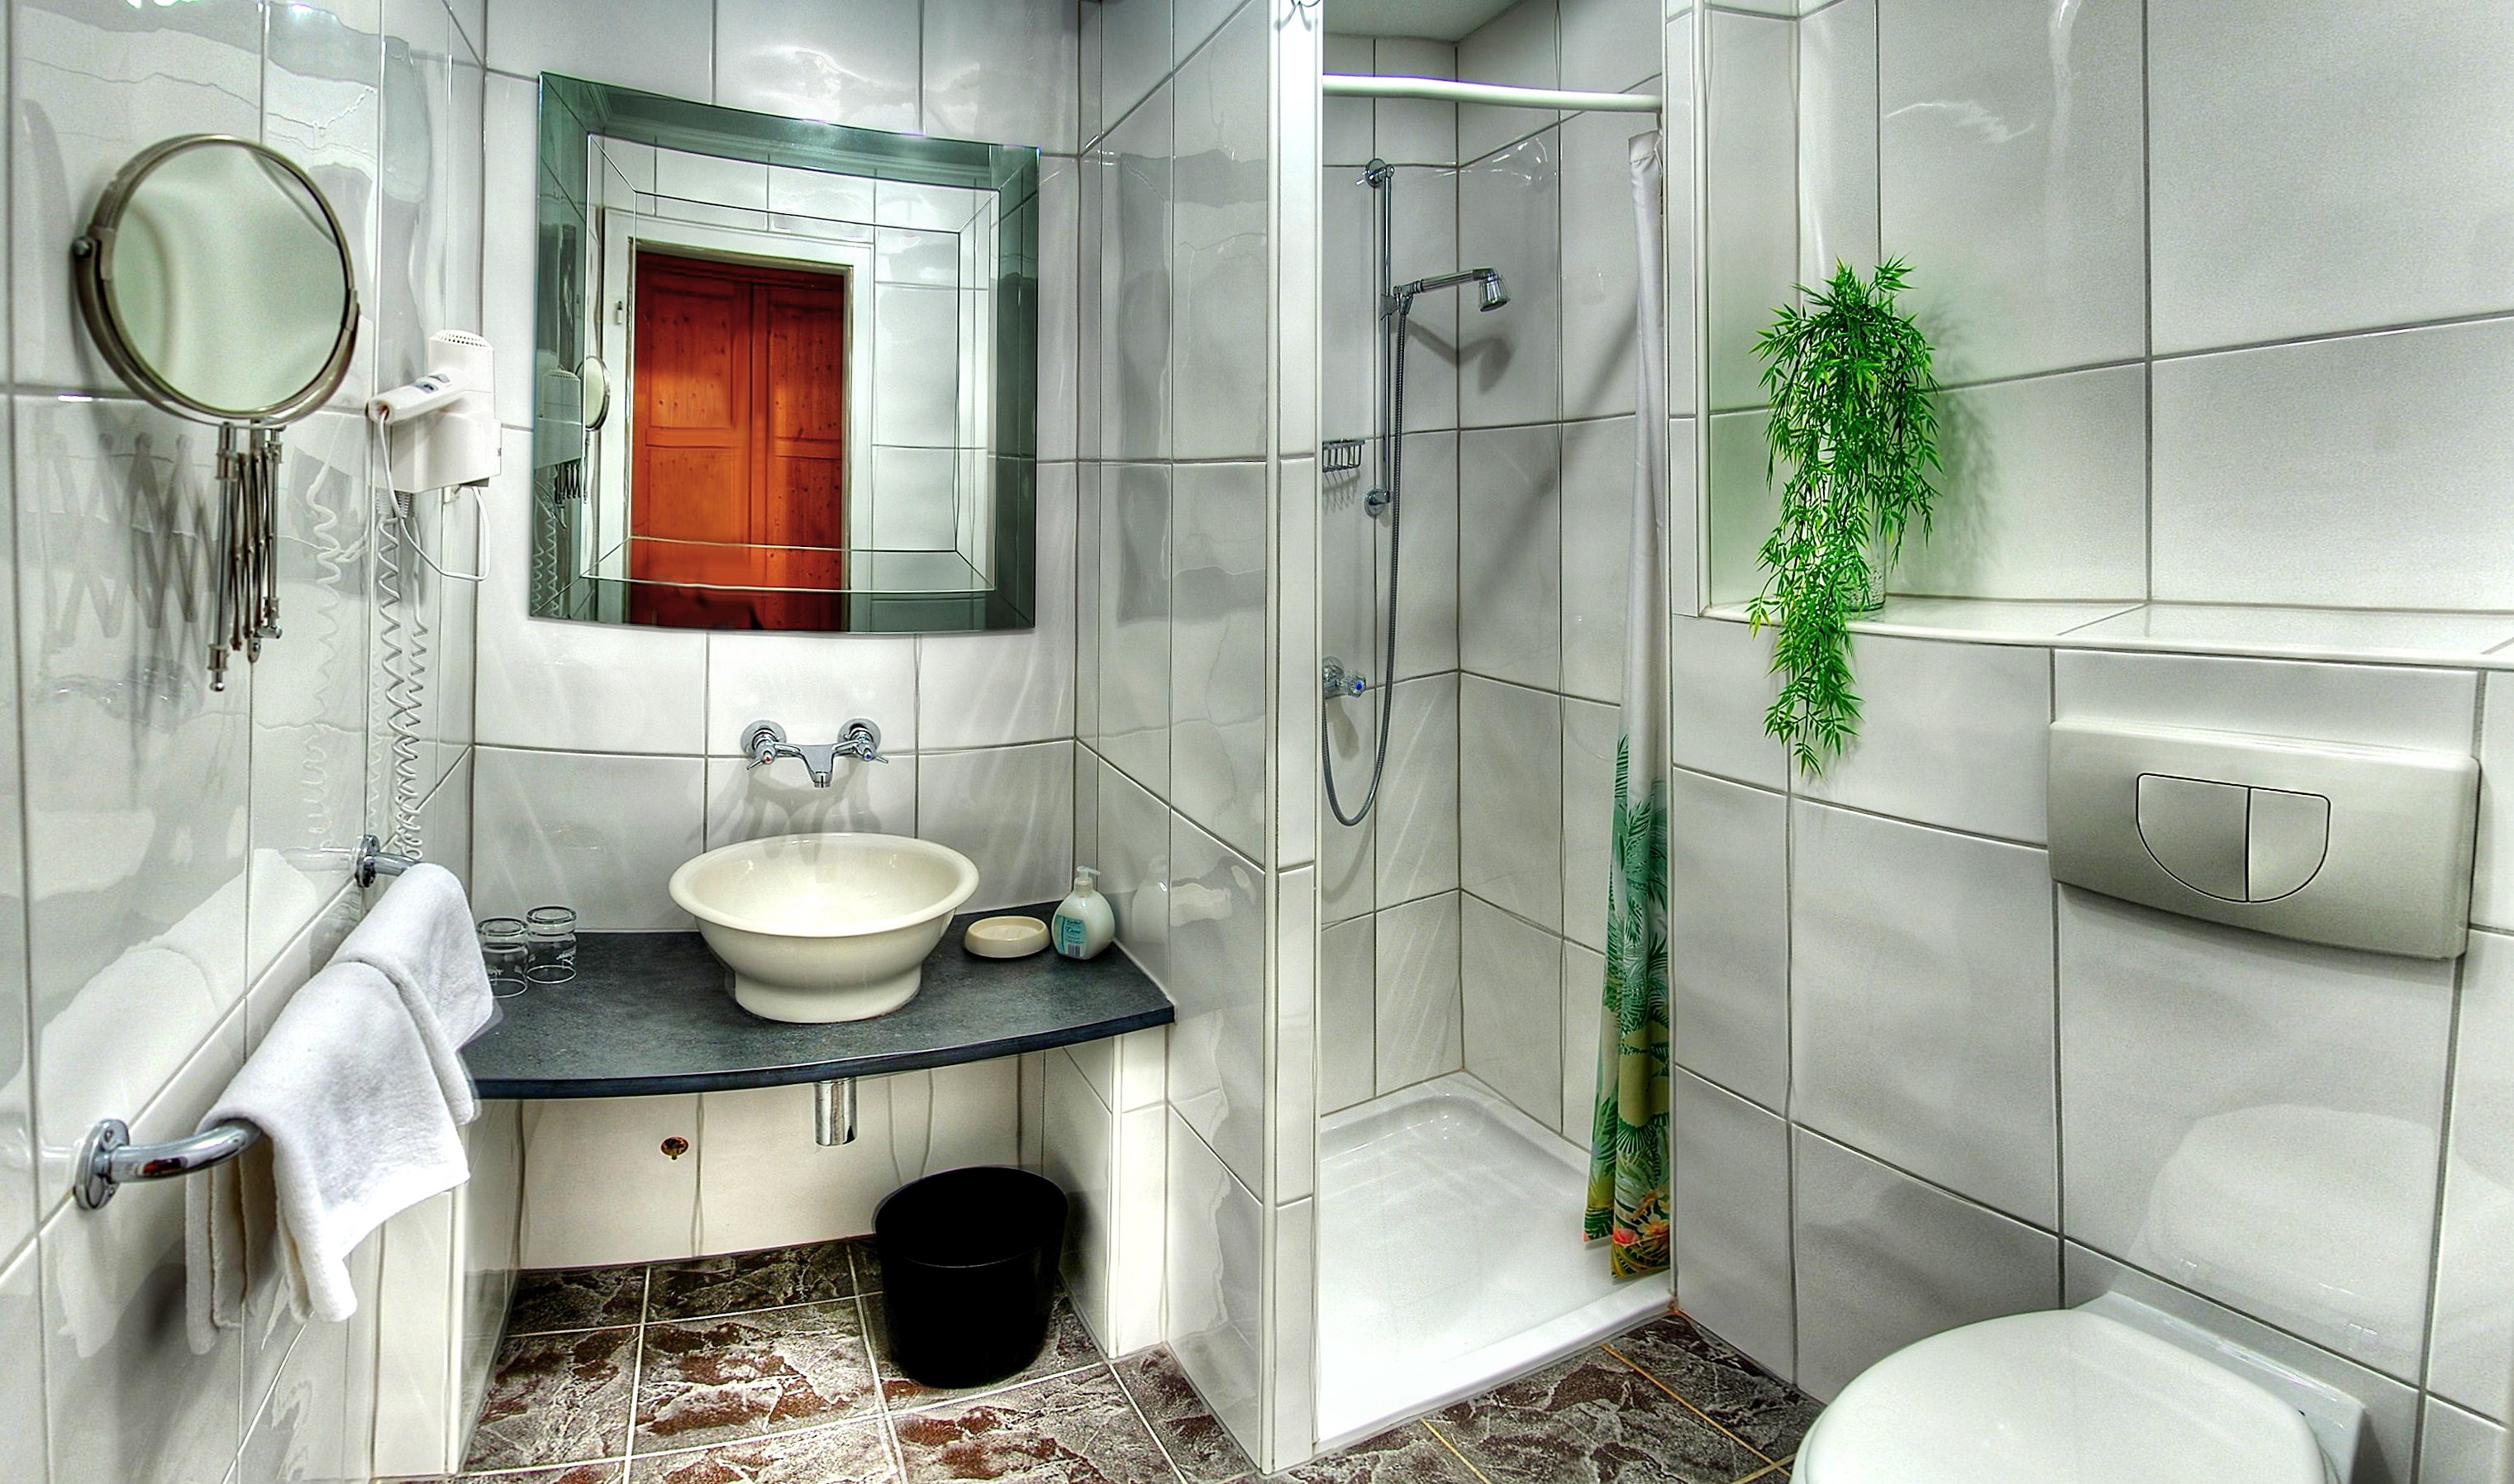 tile, miscellanea, miscellaneous, hdr, mirror, shower, bath, restroom, toilet, washbasin, washstand